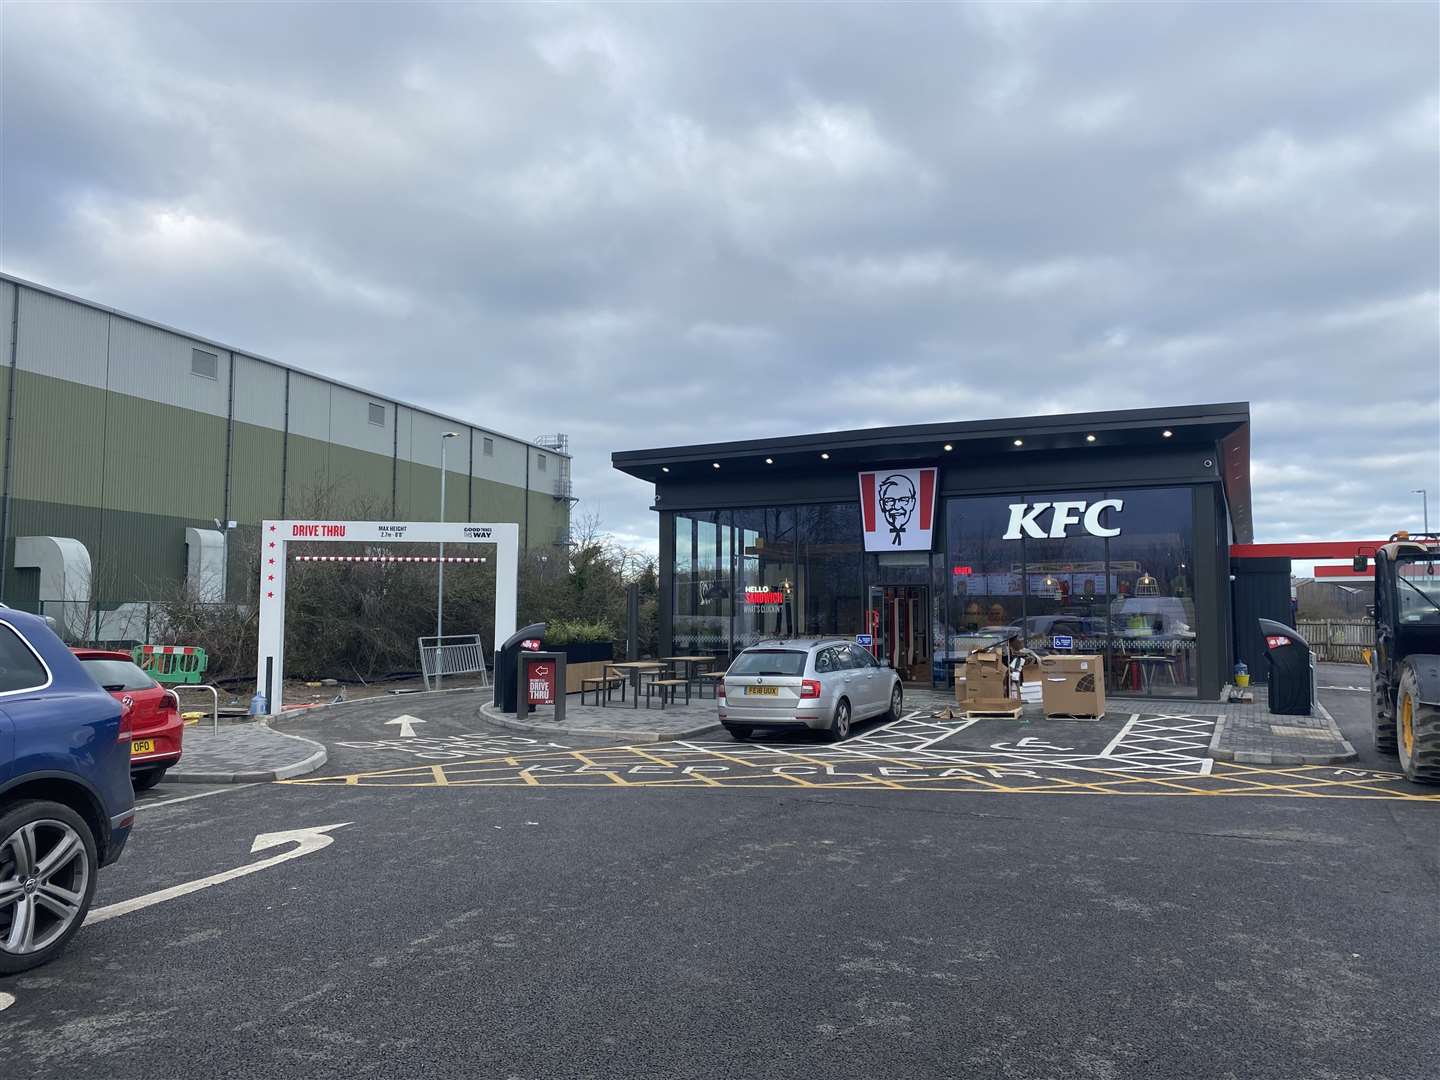 The KFC will open along the A256 at Port Richborough, near Sandwich